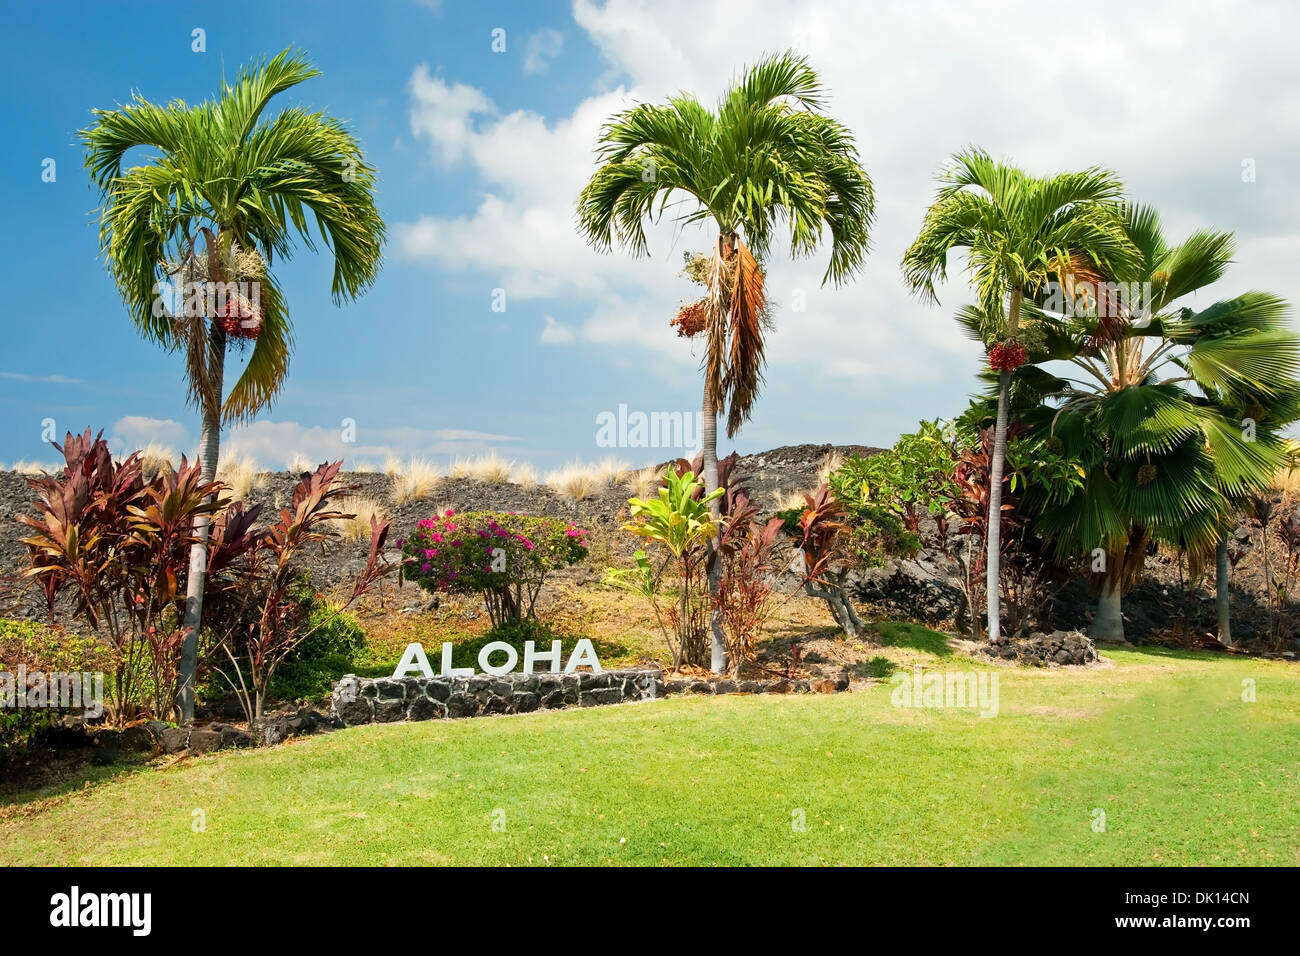 Aloha sign with palm trees on Big Island Hawaii Stock Photo